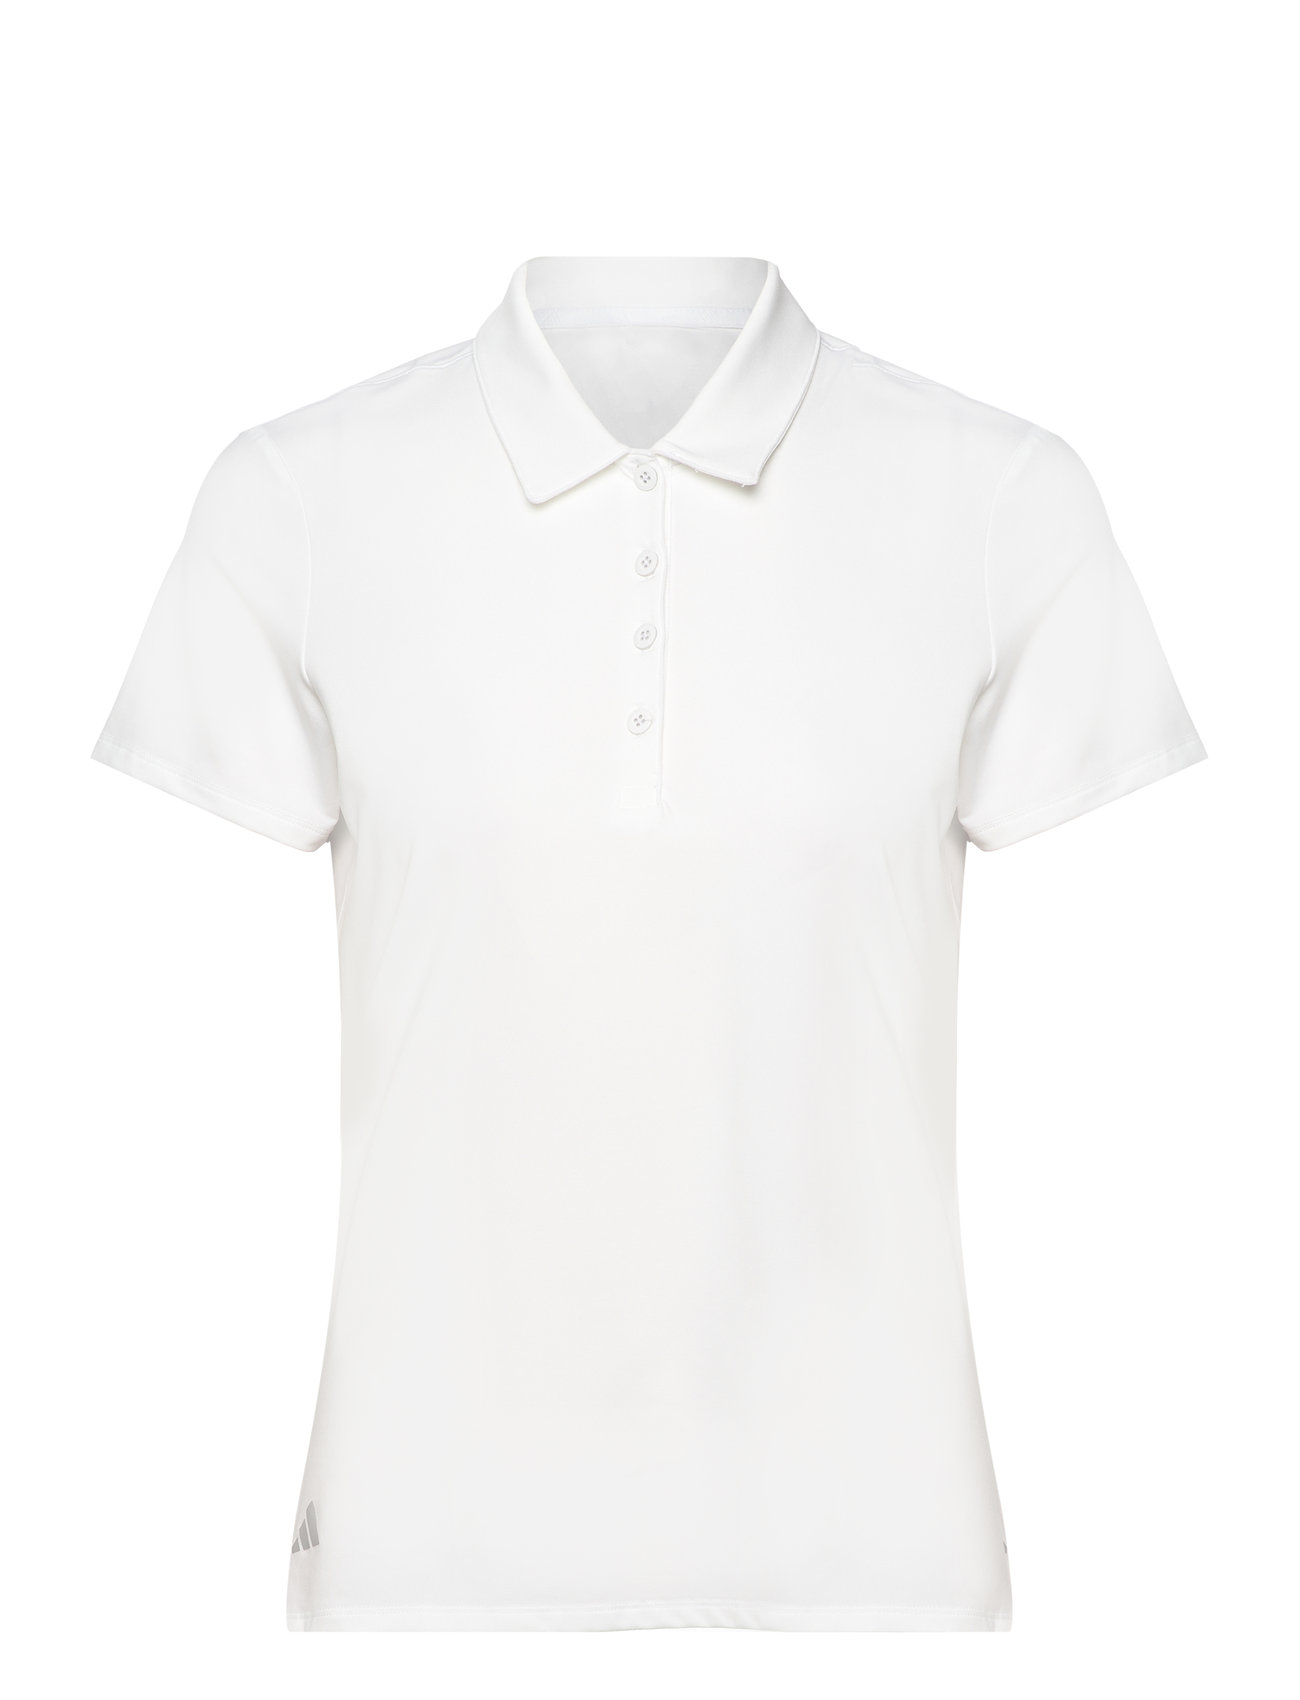 W Ult C Sld Ss Sport T-shirts & Tops Polos White Adidas Golf